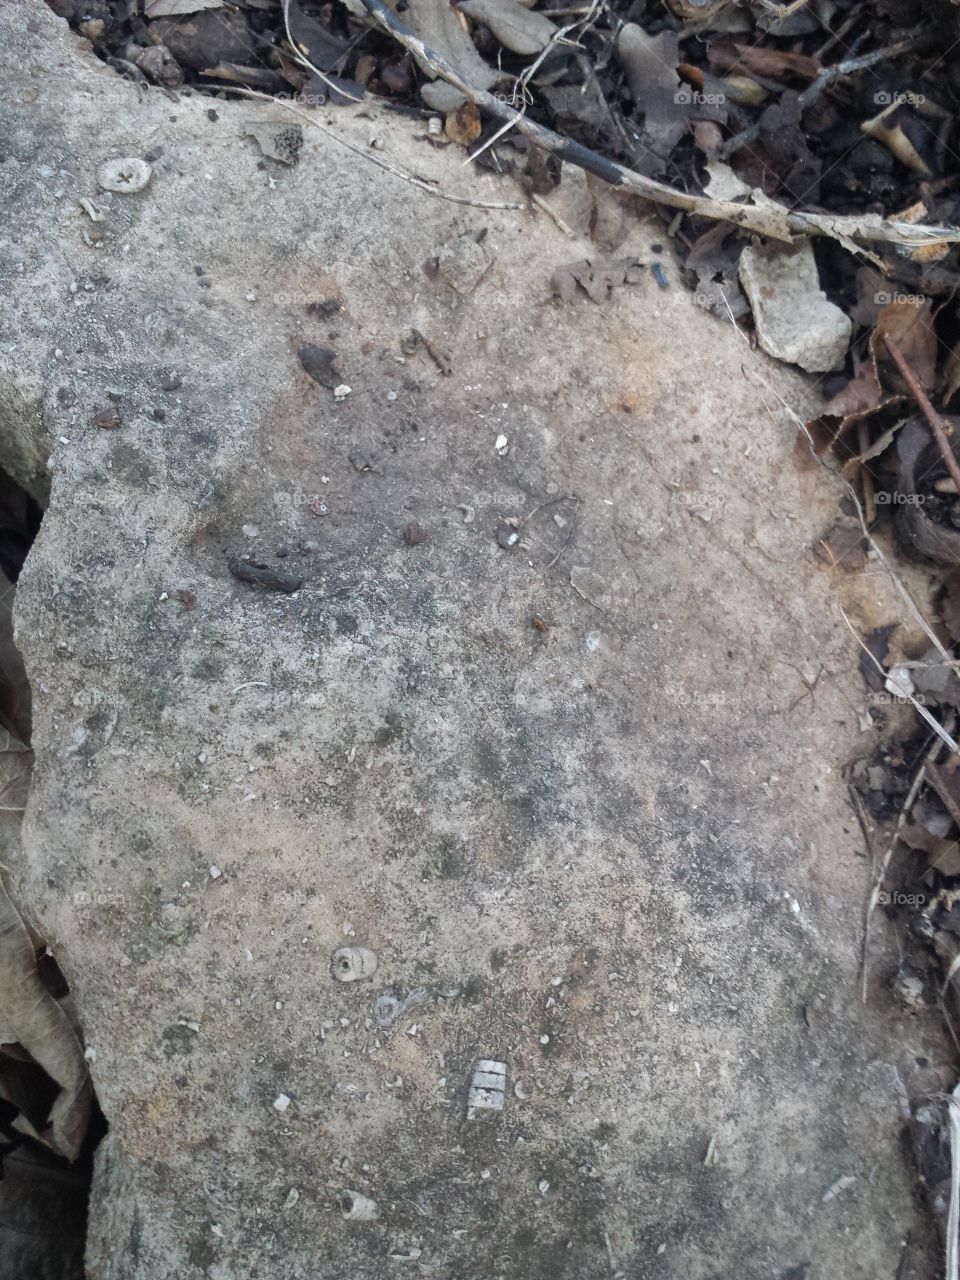 limestone with crinoids